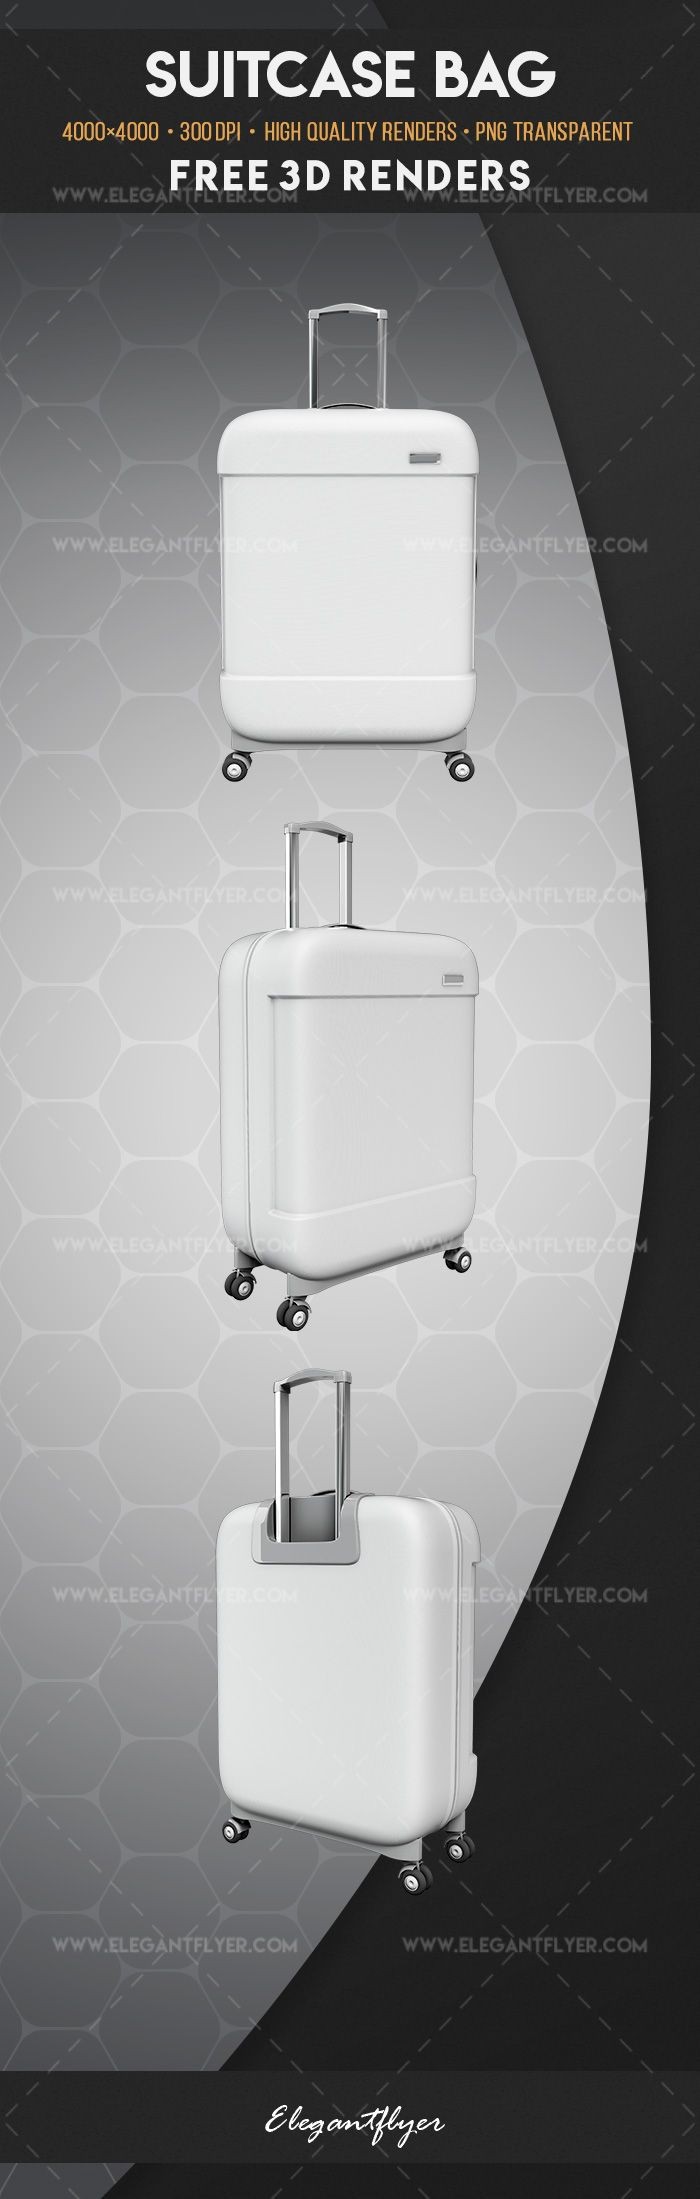 Suitcase Bag by ElegantFlyer